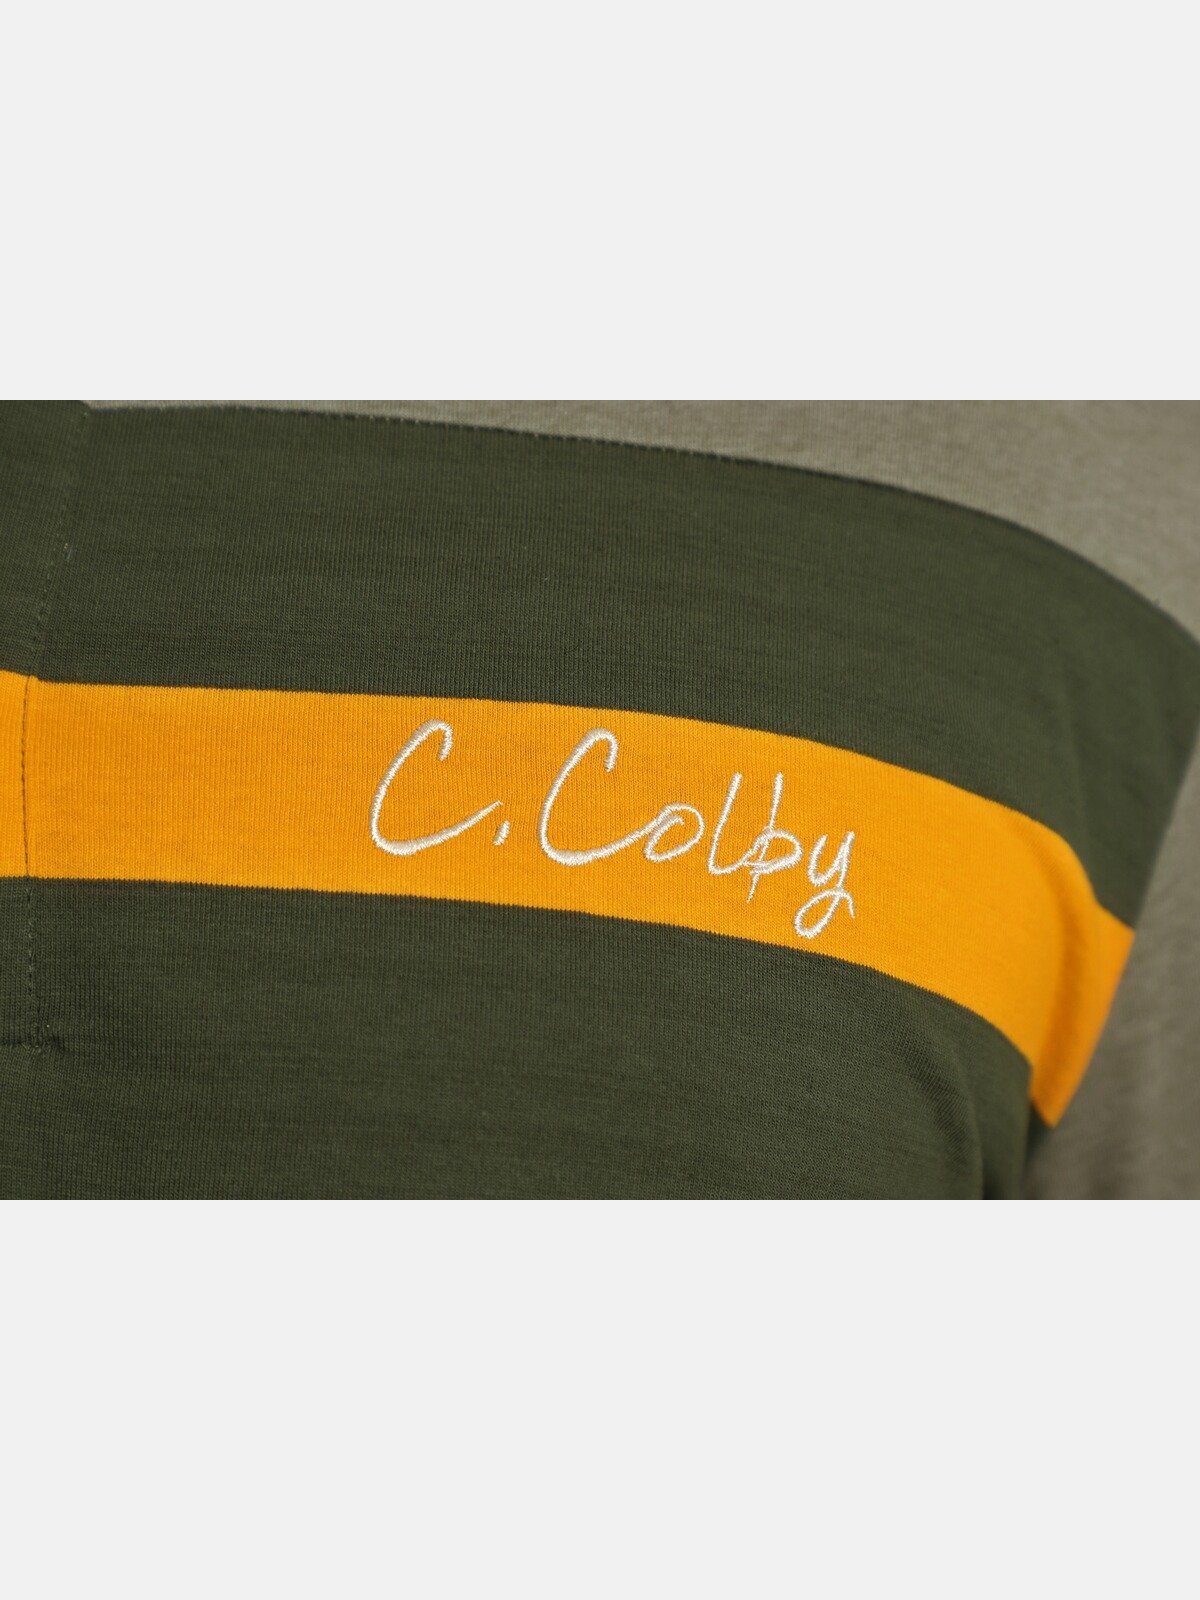 Charles GARWY Colour-Blocking Sweatshirt in Colby stylisch EARL